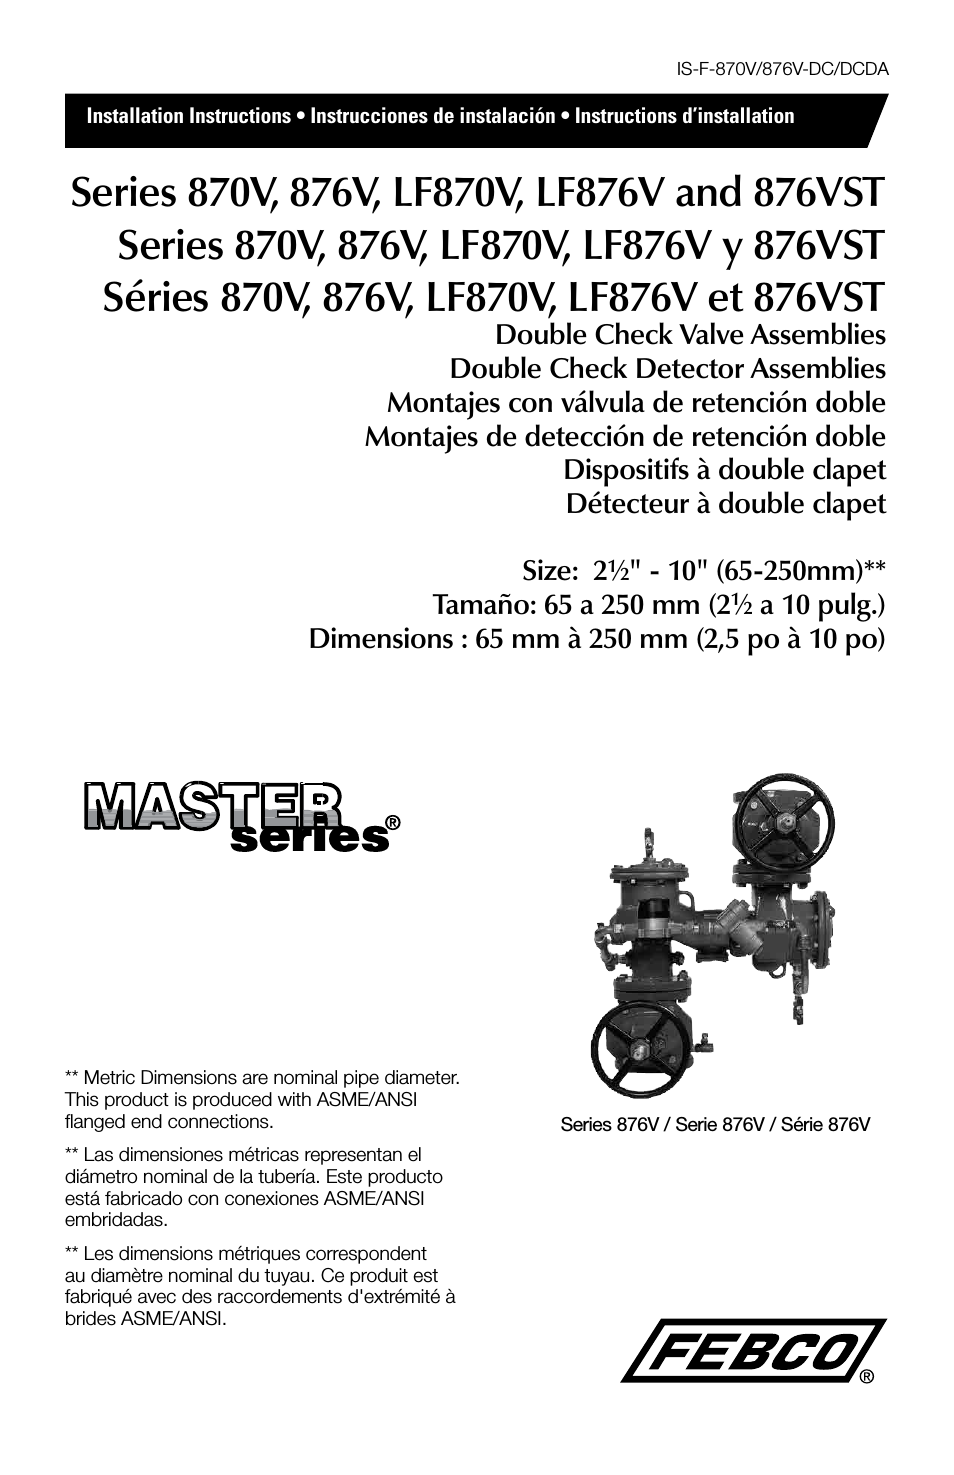 876VST Master Series Configurable Design Double Check Detector Assemblies